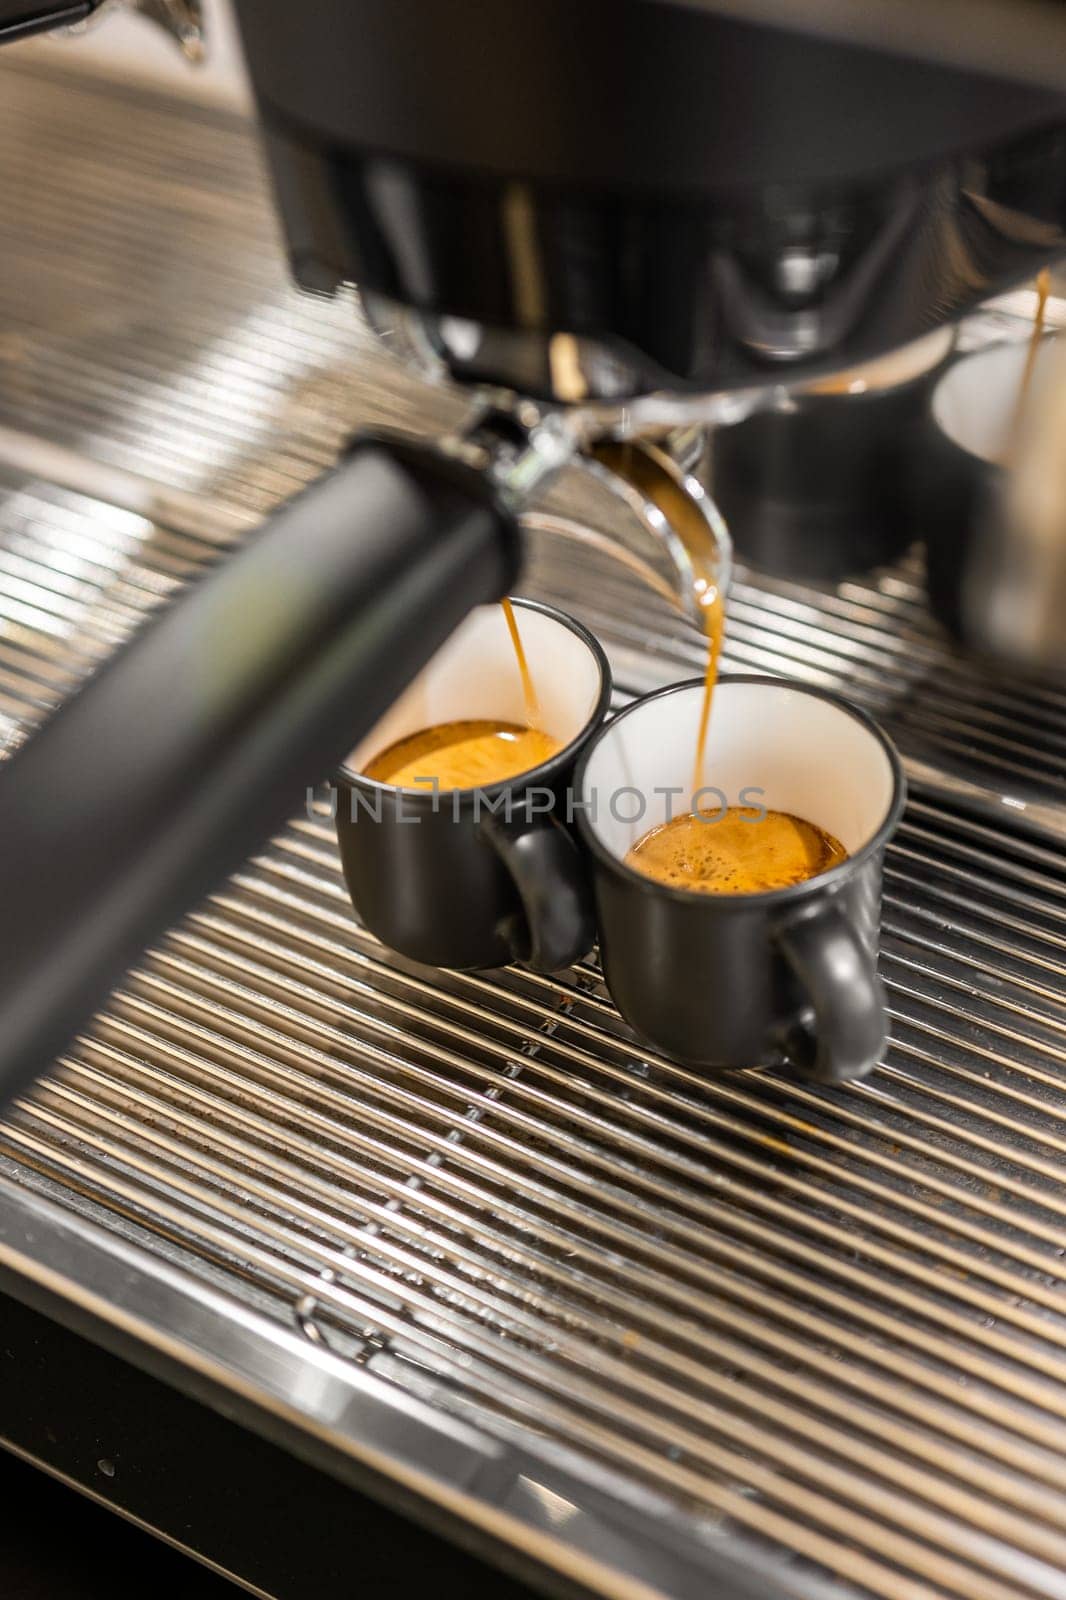 Espresso machine pouring fresh coffee into two black cups by apavlin